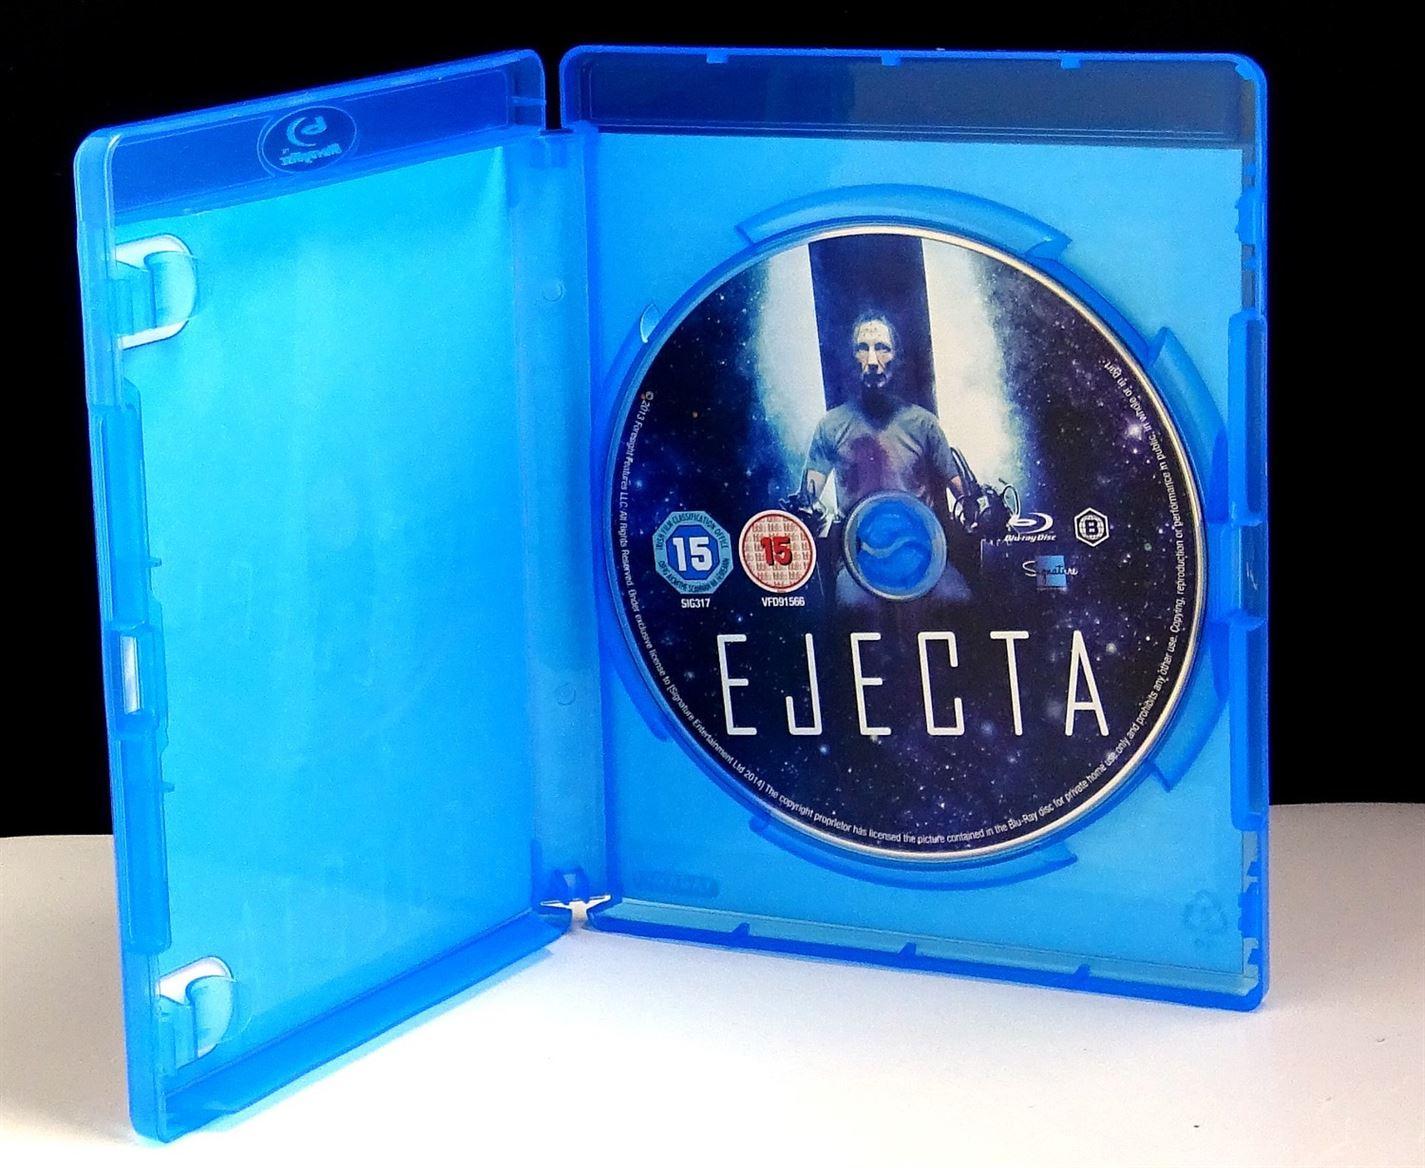 Ejecta (Blu Ray) - UK Seller